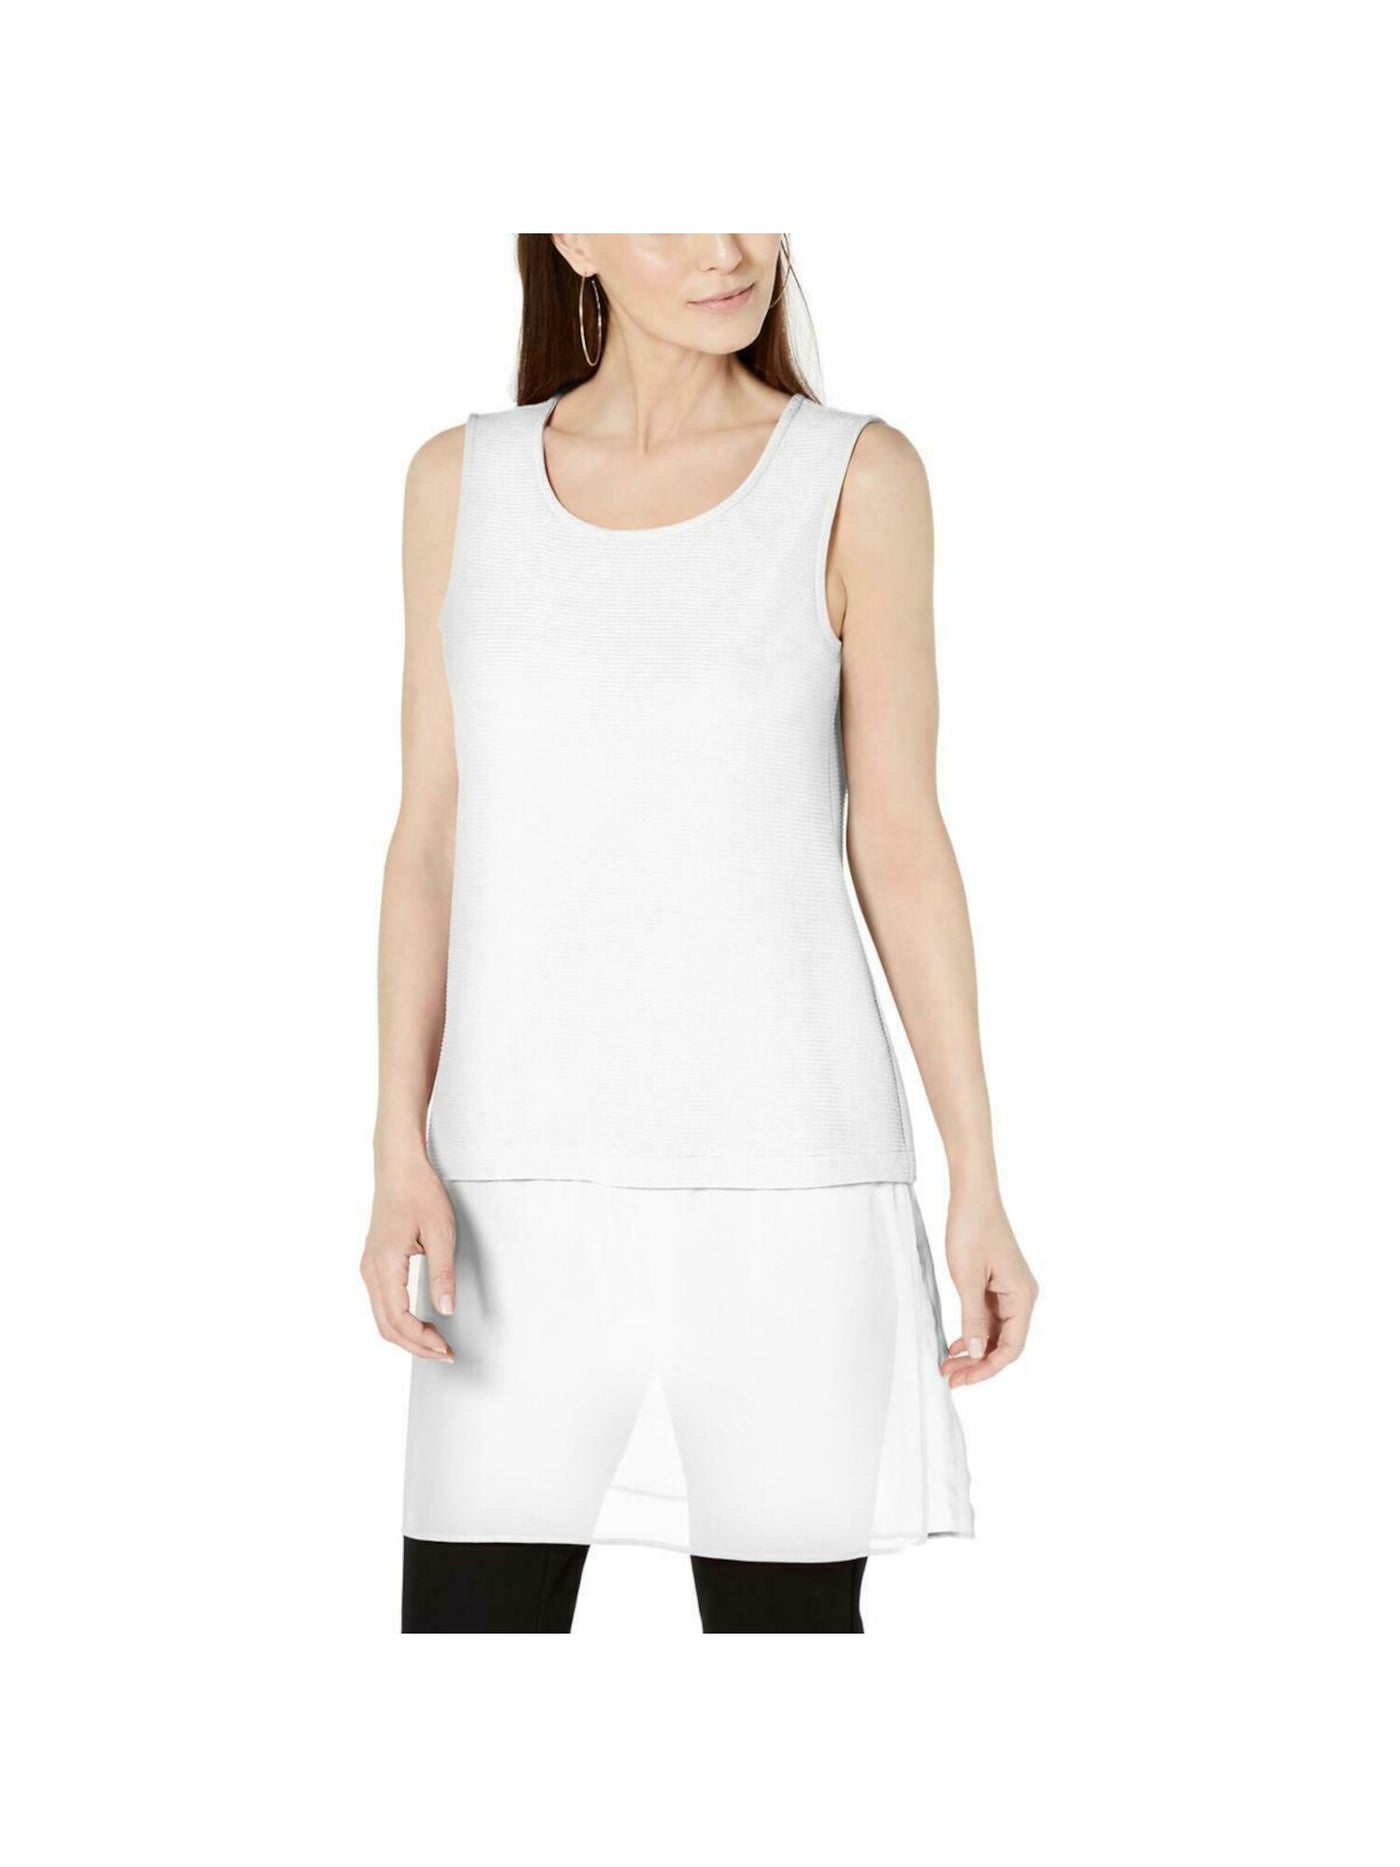 ALFANI Womens White Sleeveless Scoop Neck Wear To Work Blouse S